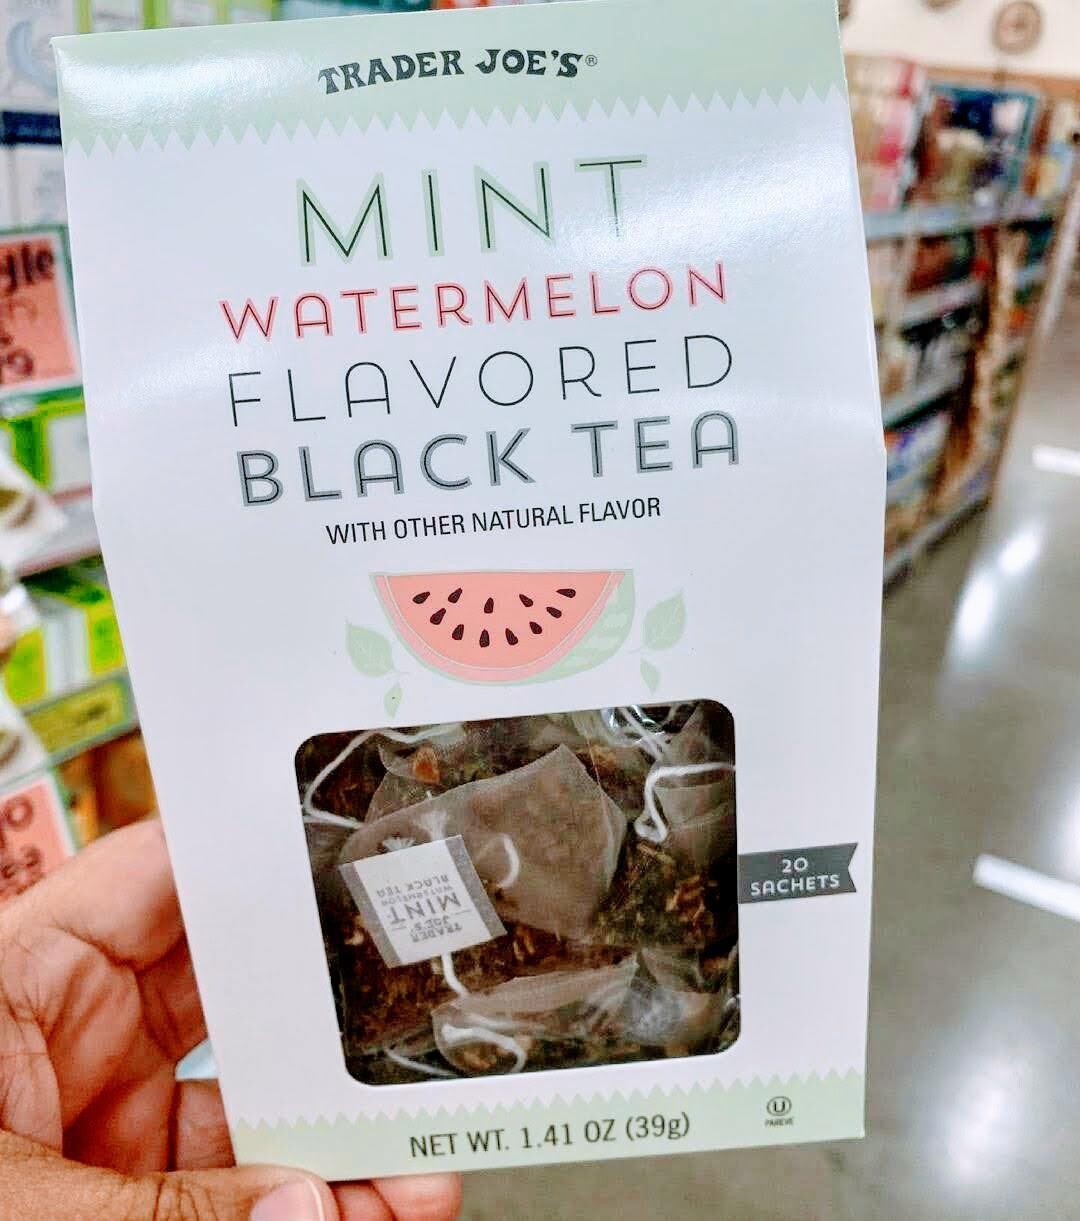 Trader Joe's Watermelon Flavored Black Tea